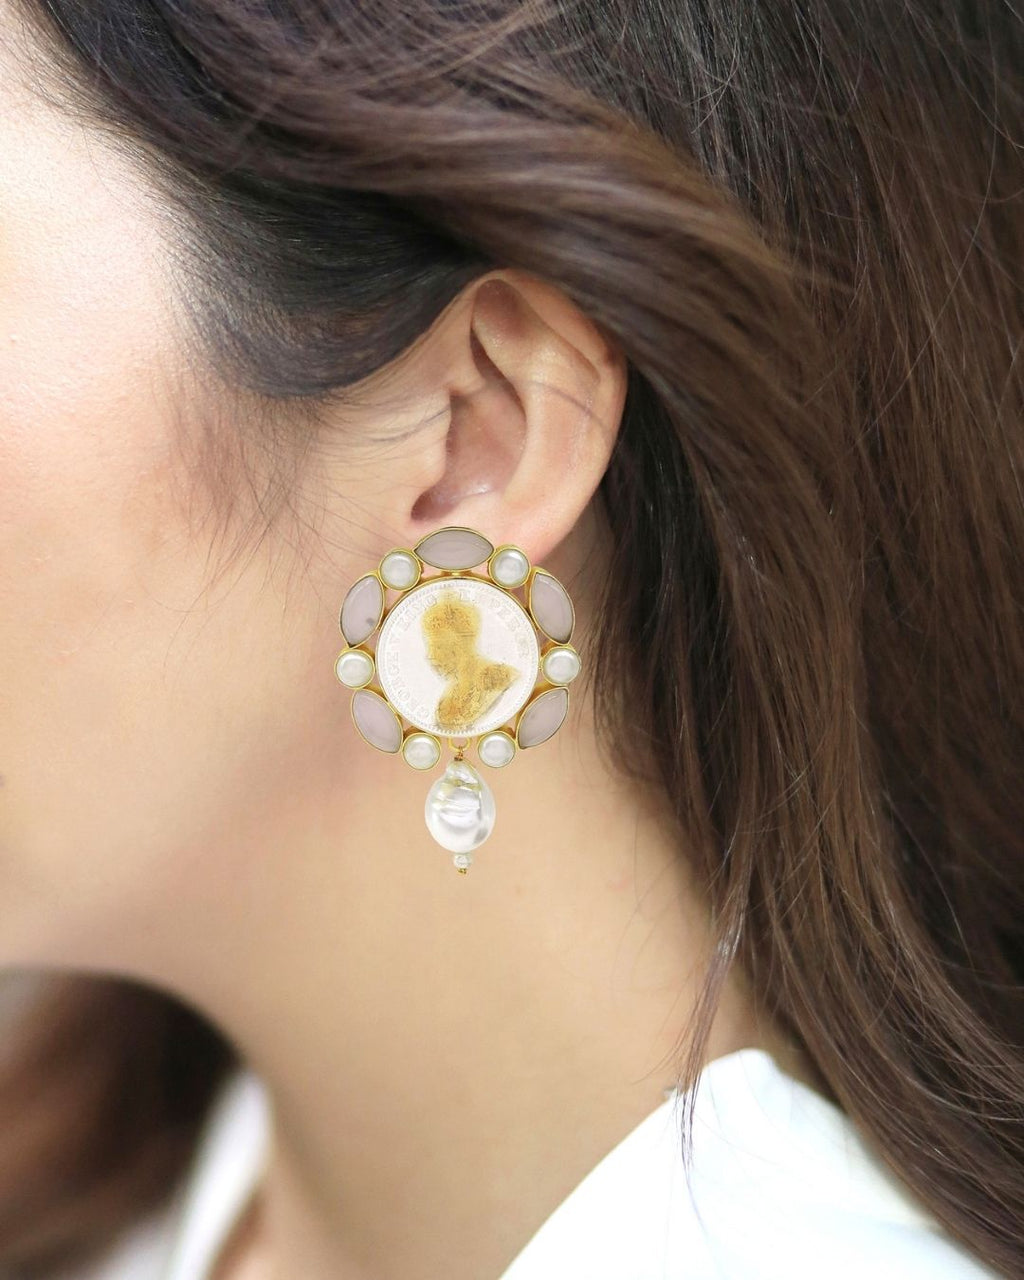 Oracle Pearl Danglers - Earrings - Handcrafted Jewellery - Made in India - Dubai Jewellery, Fashion & Lifestyle - Dori